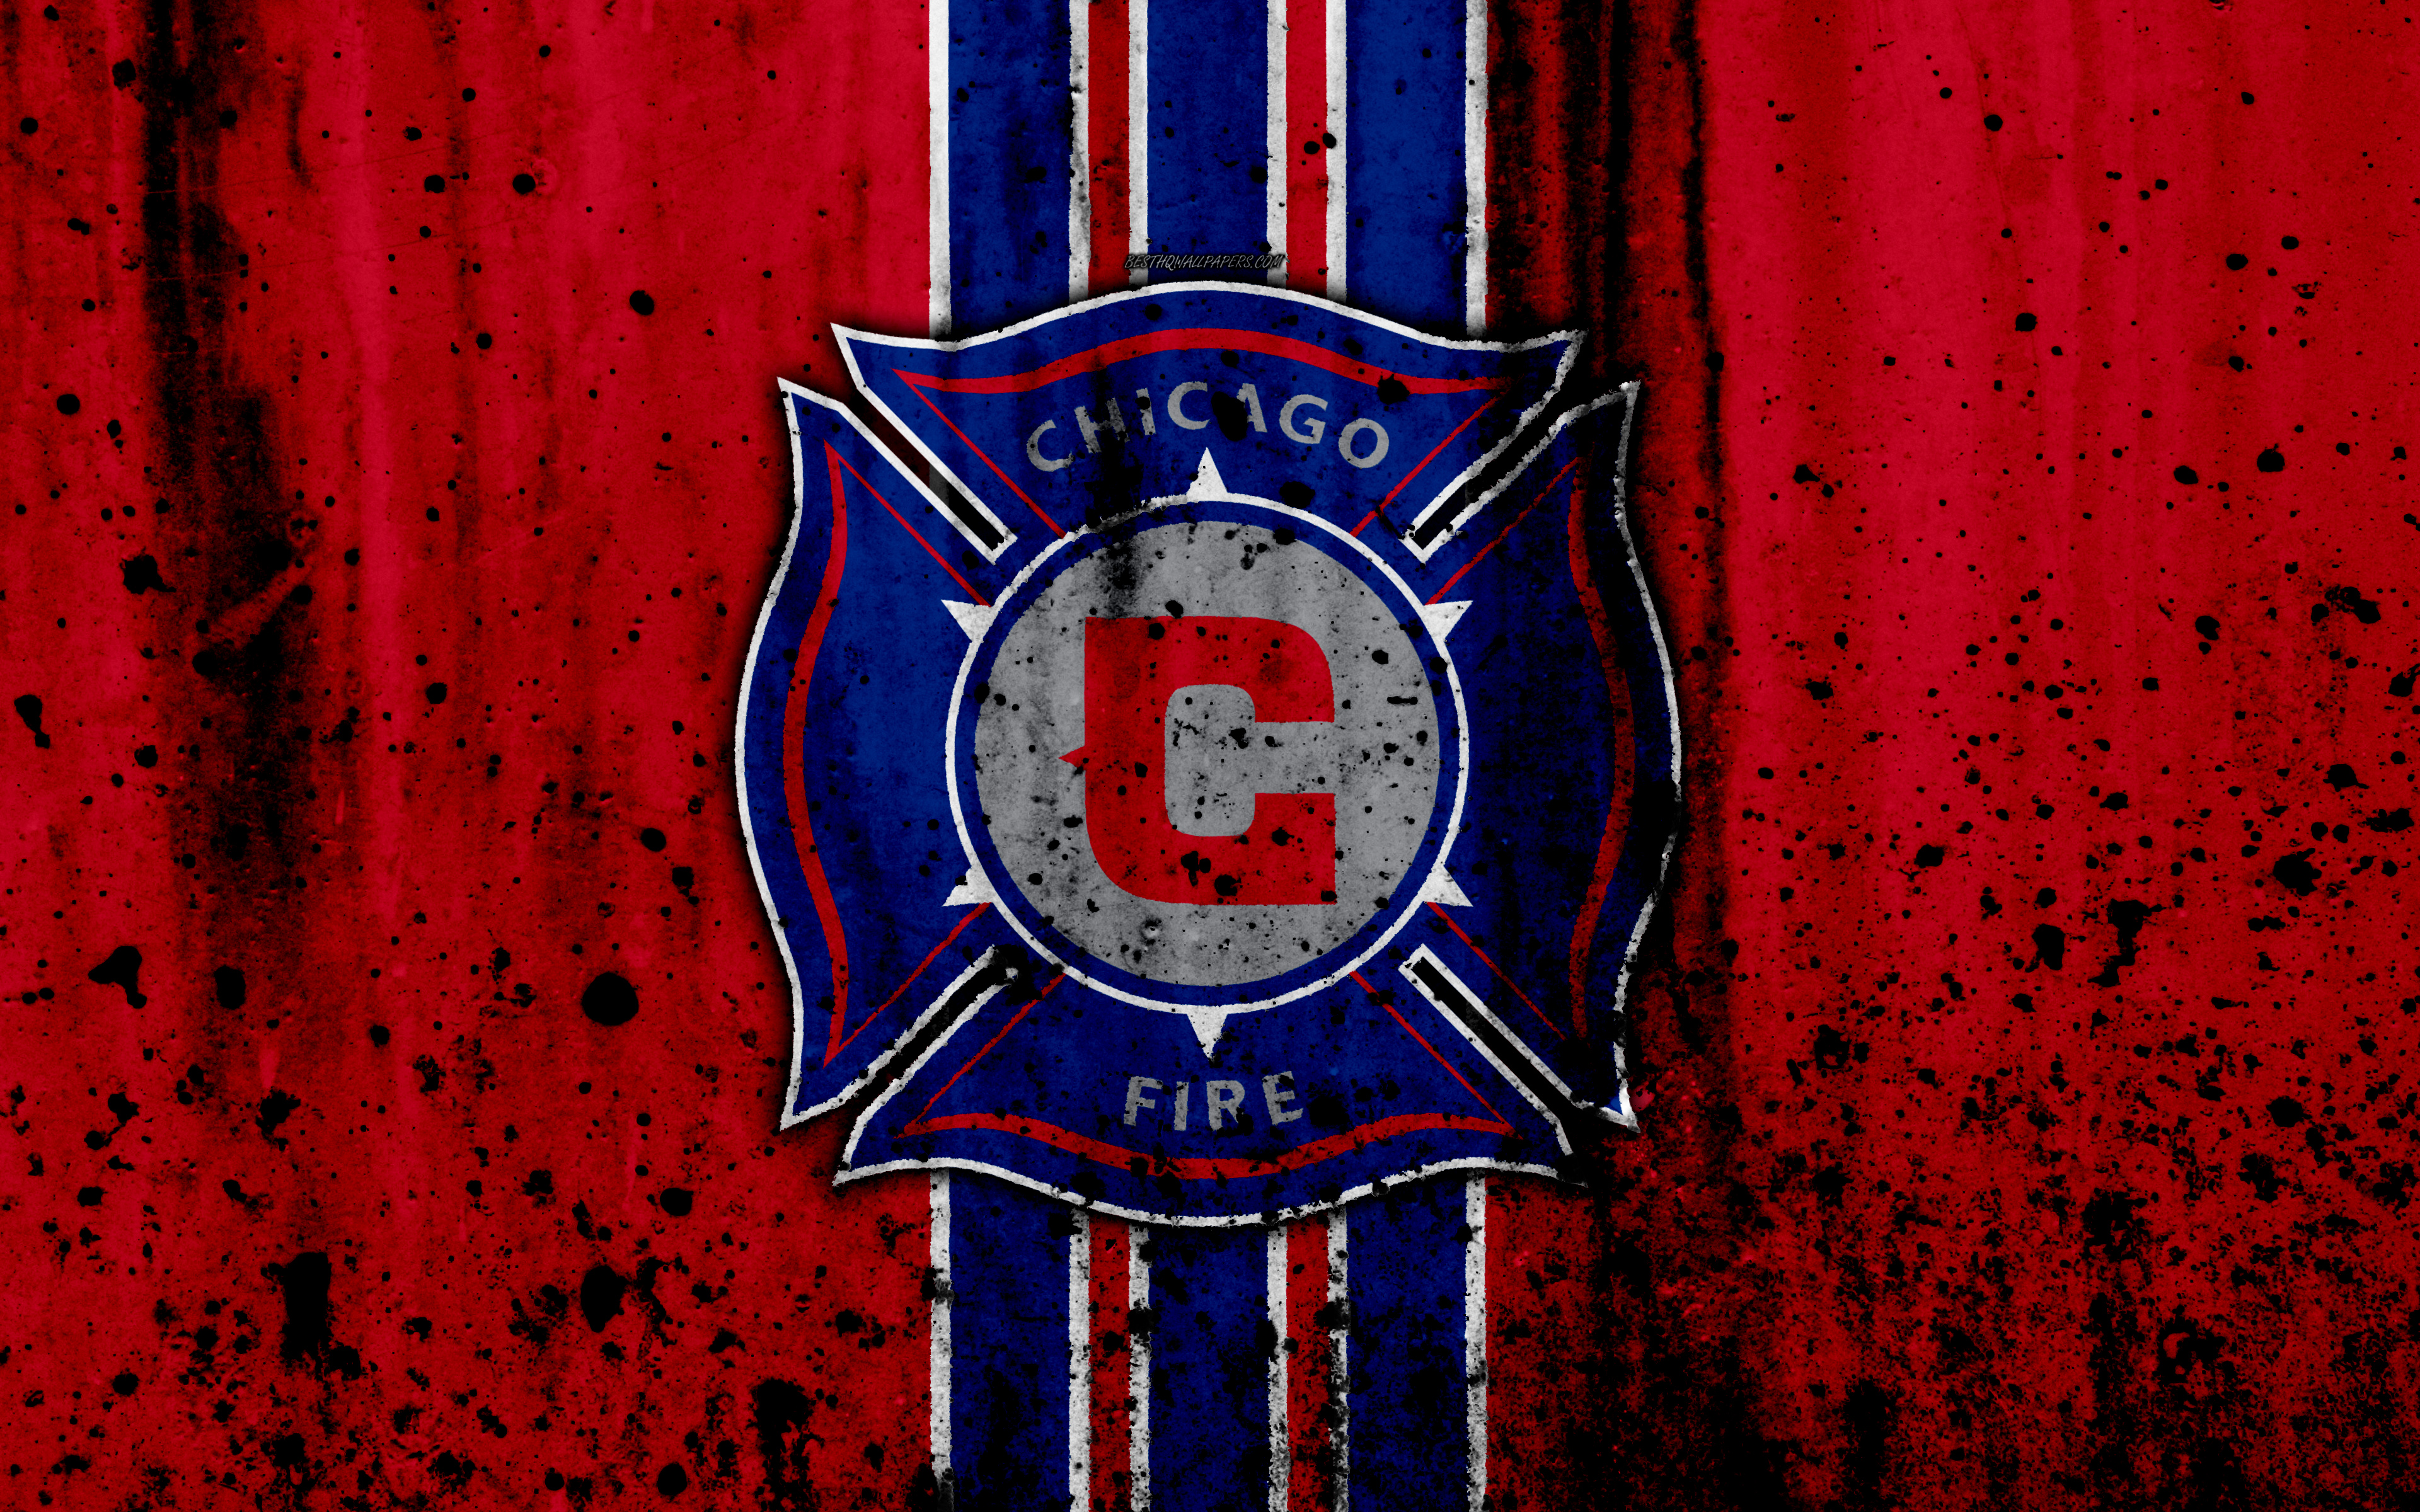 Download wallpapers 4k FC Chicago Fire grunge MLS art Eastern